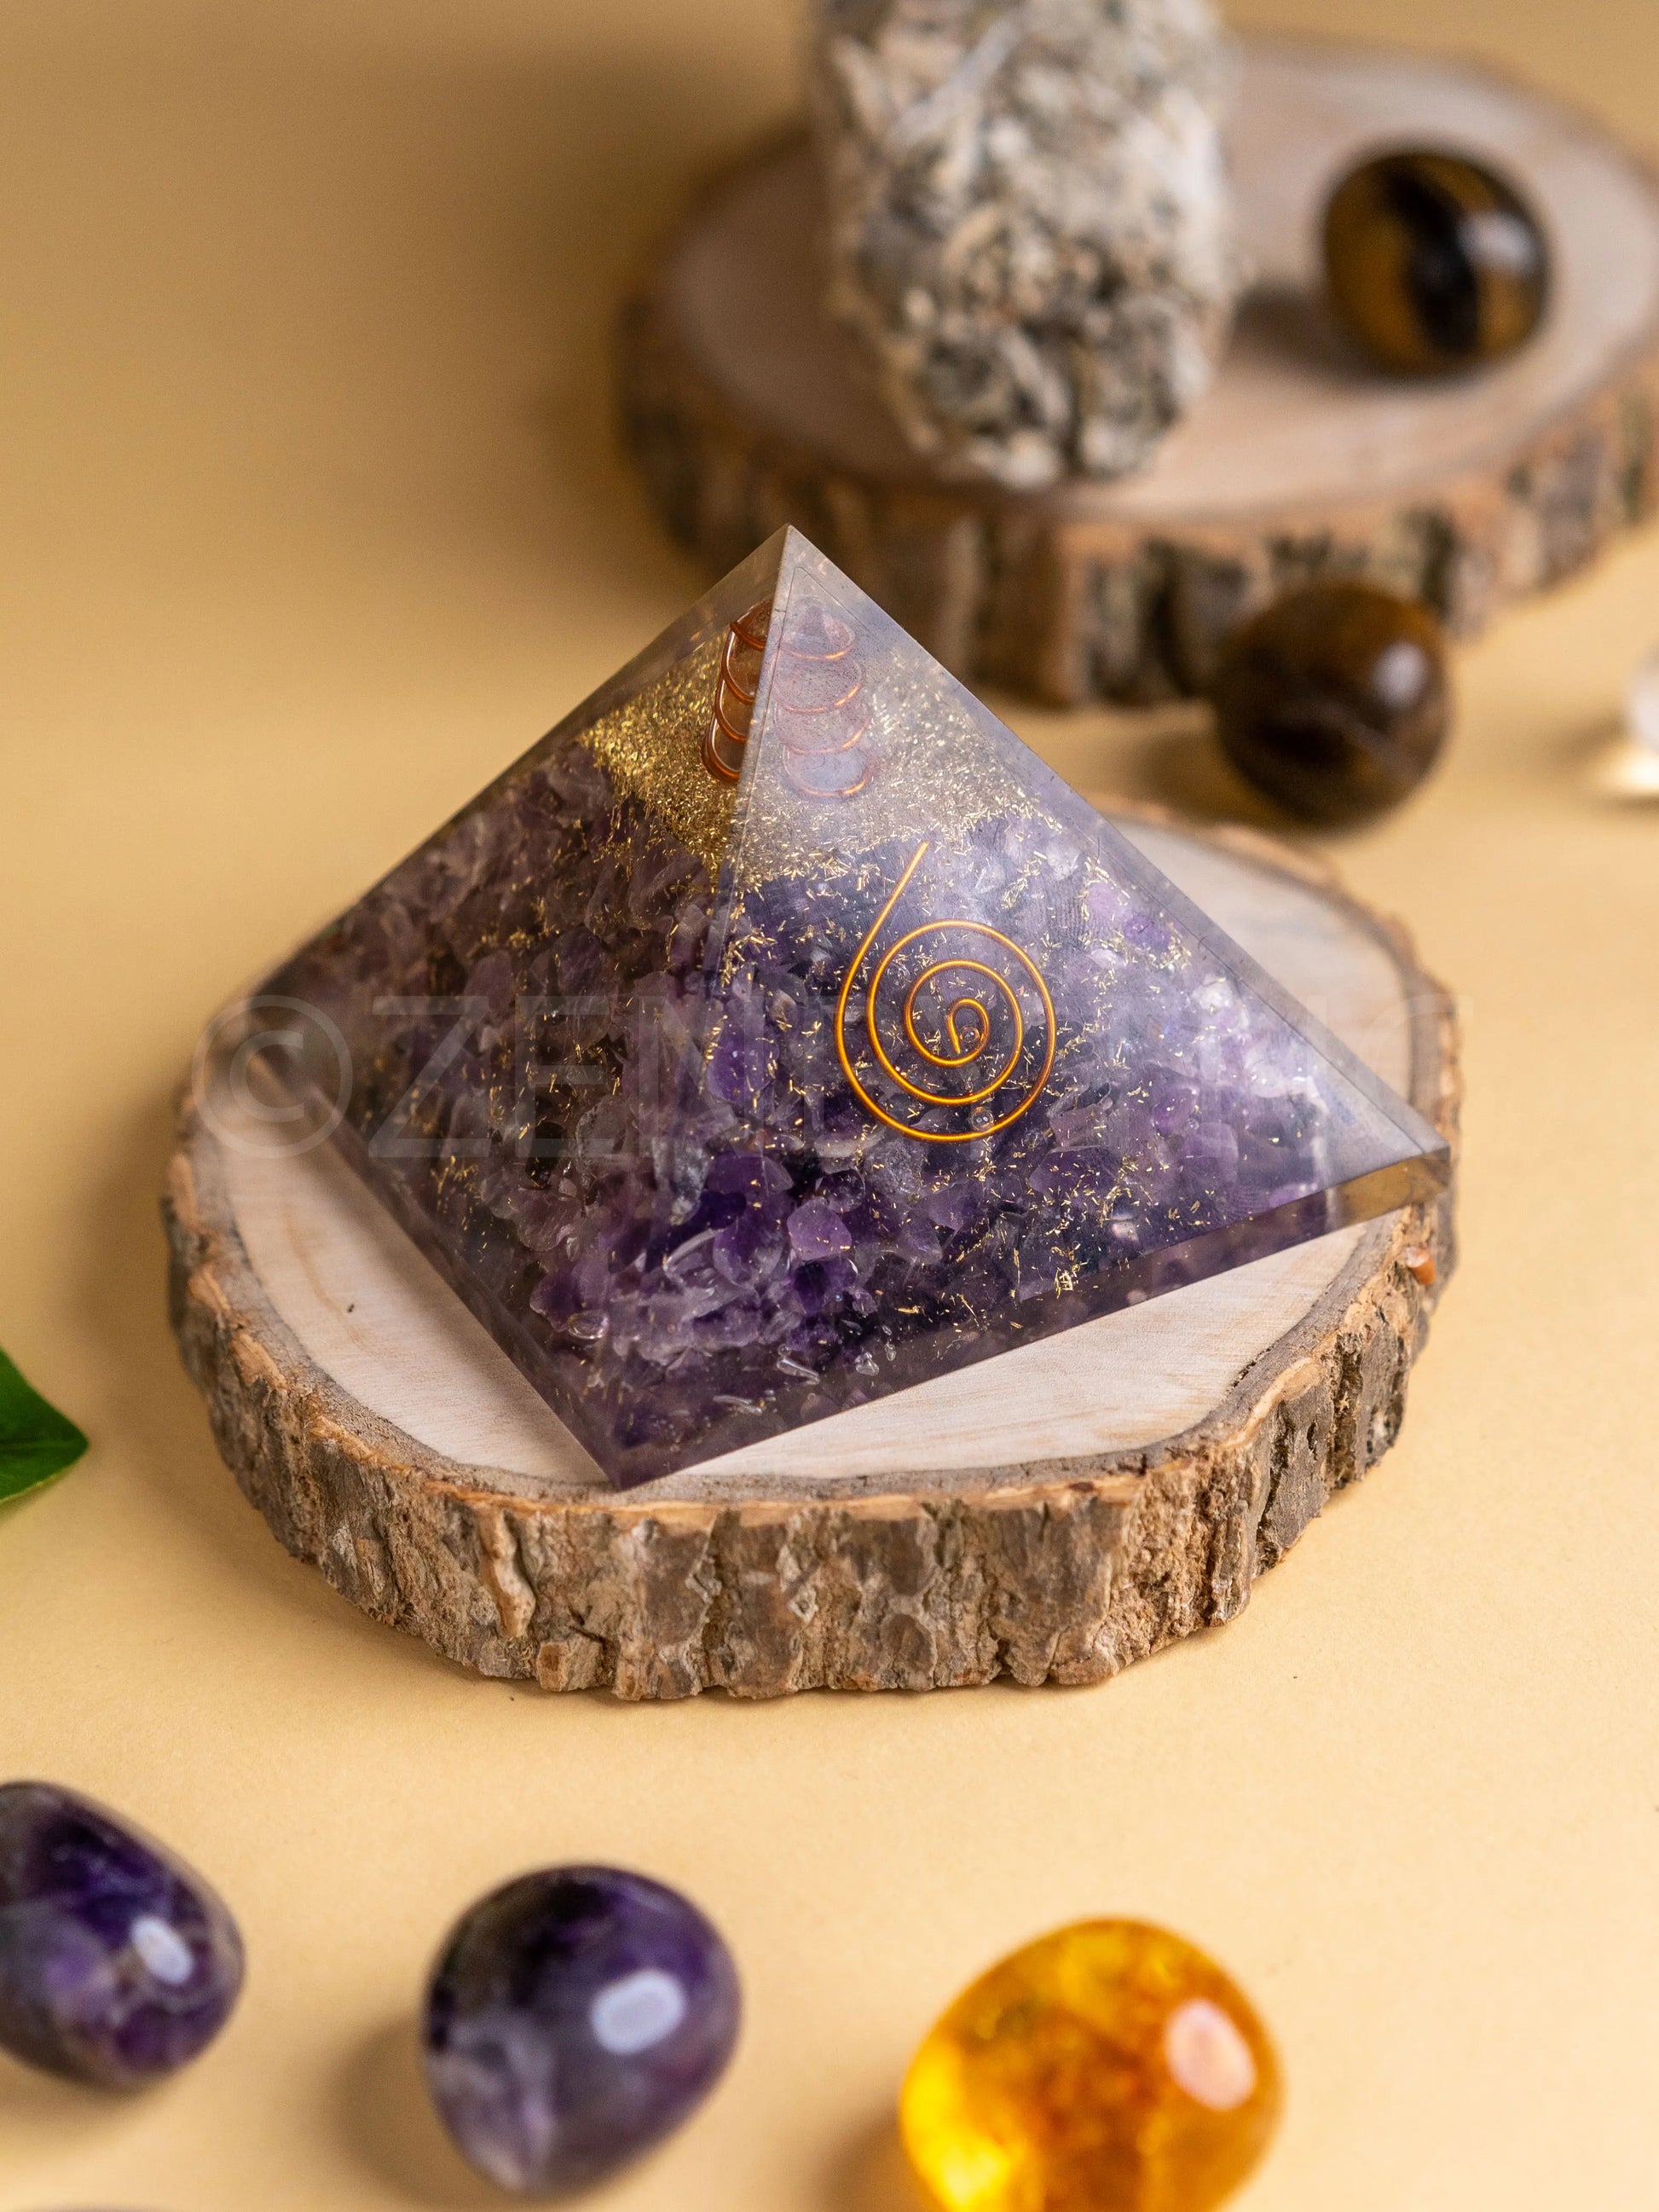 Zen Amethyst Orgonite Pyramid For Wisdom The Zen Crystals